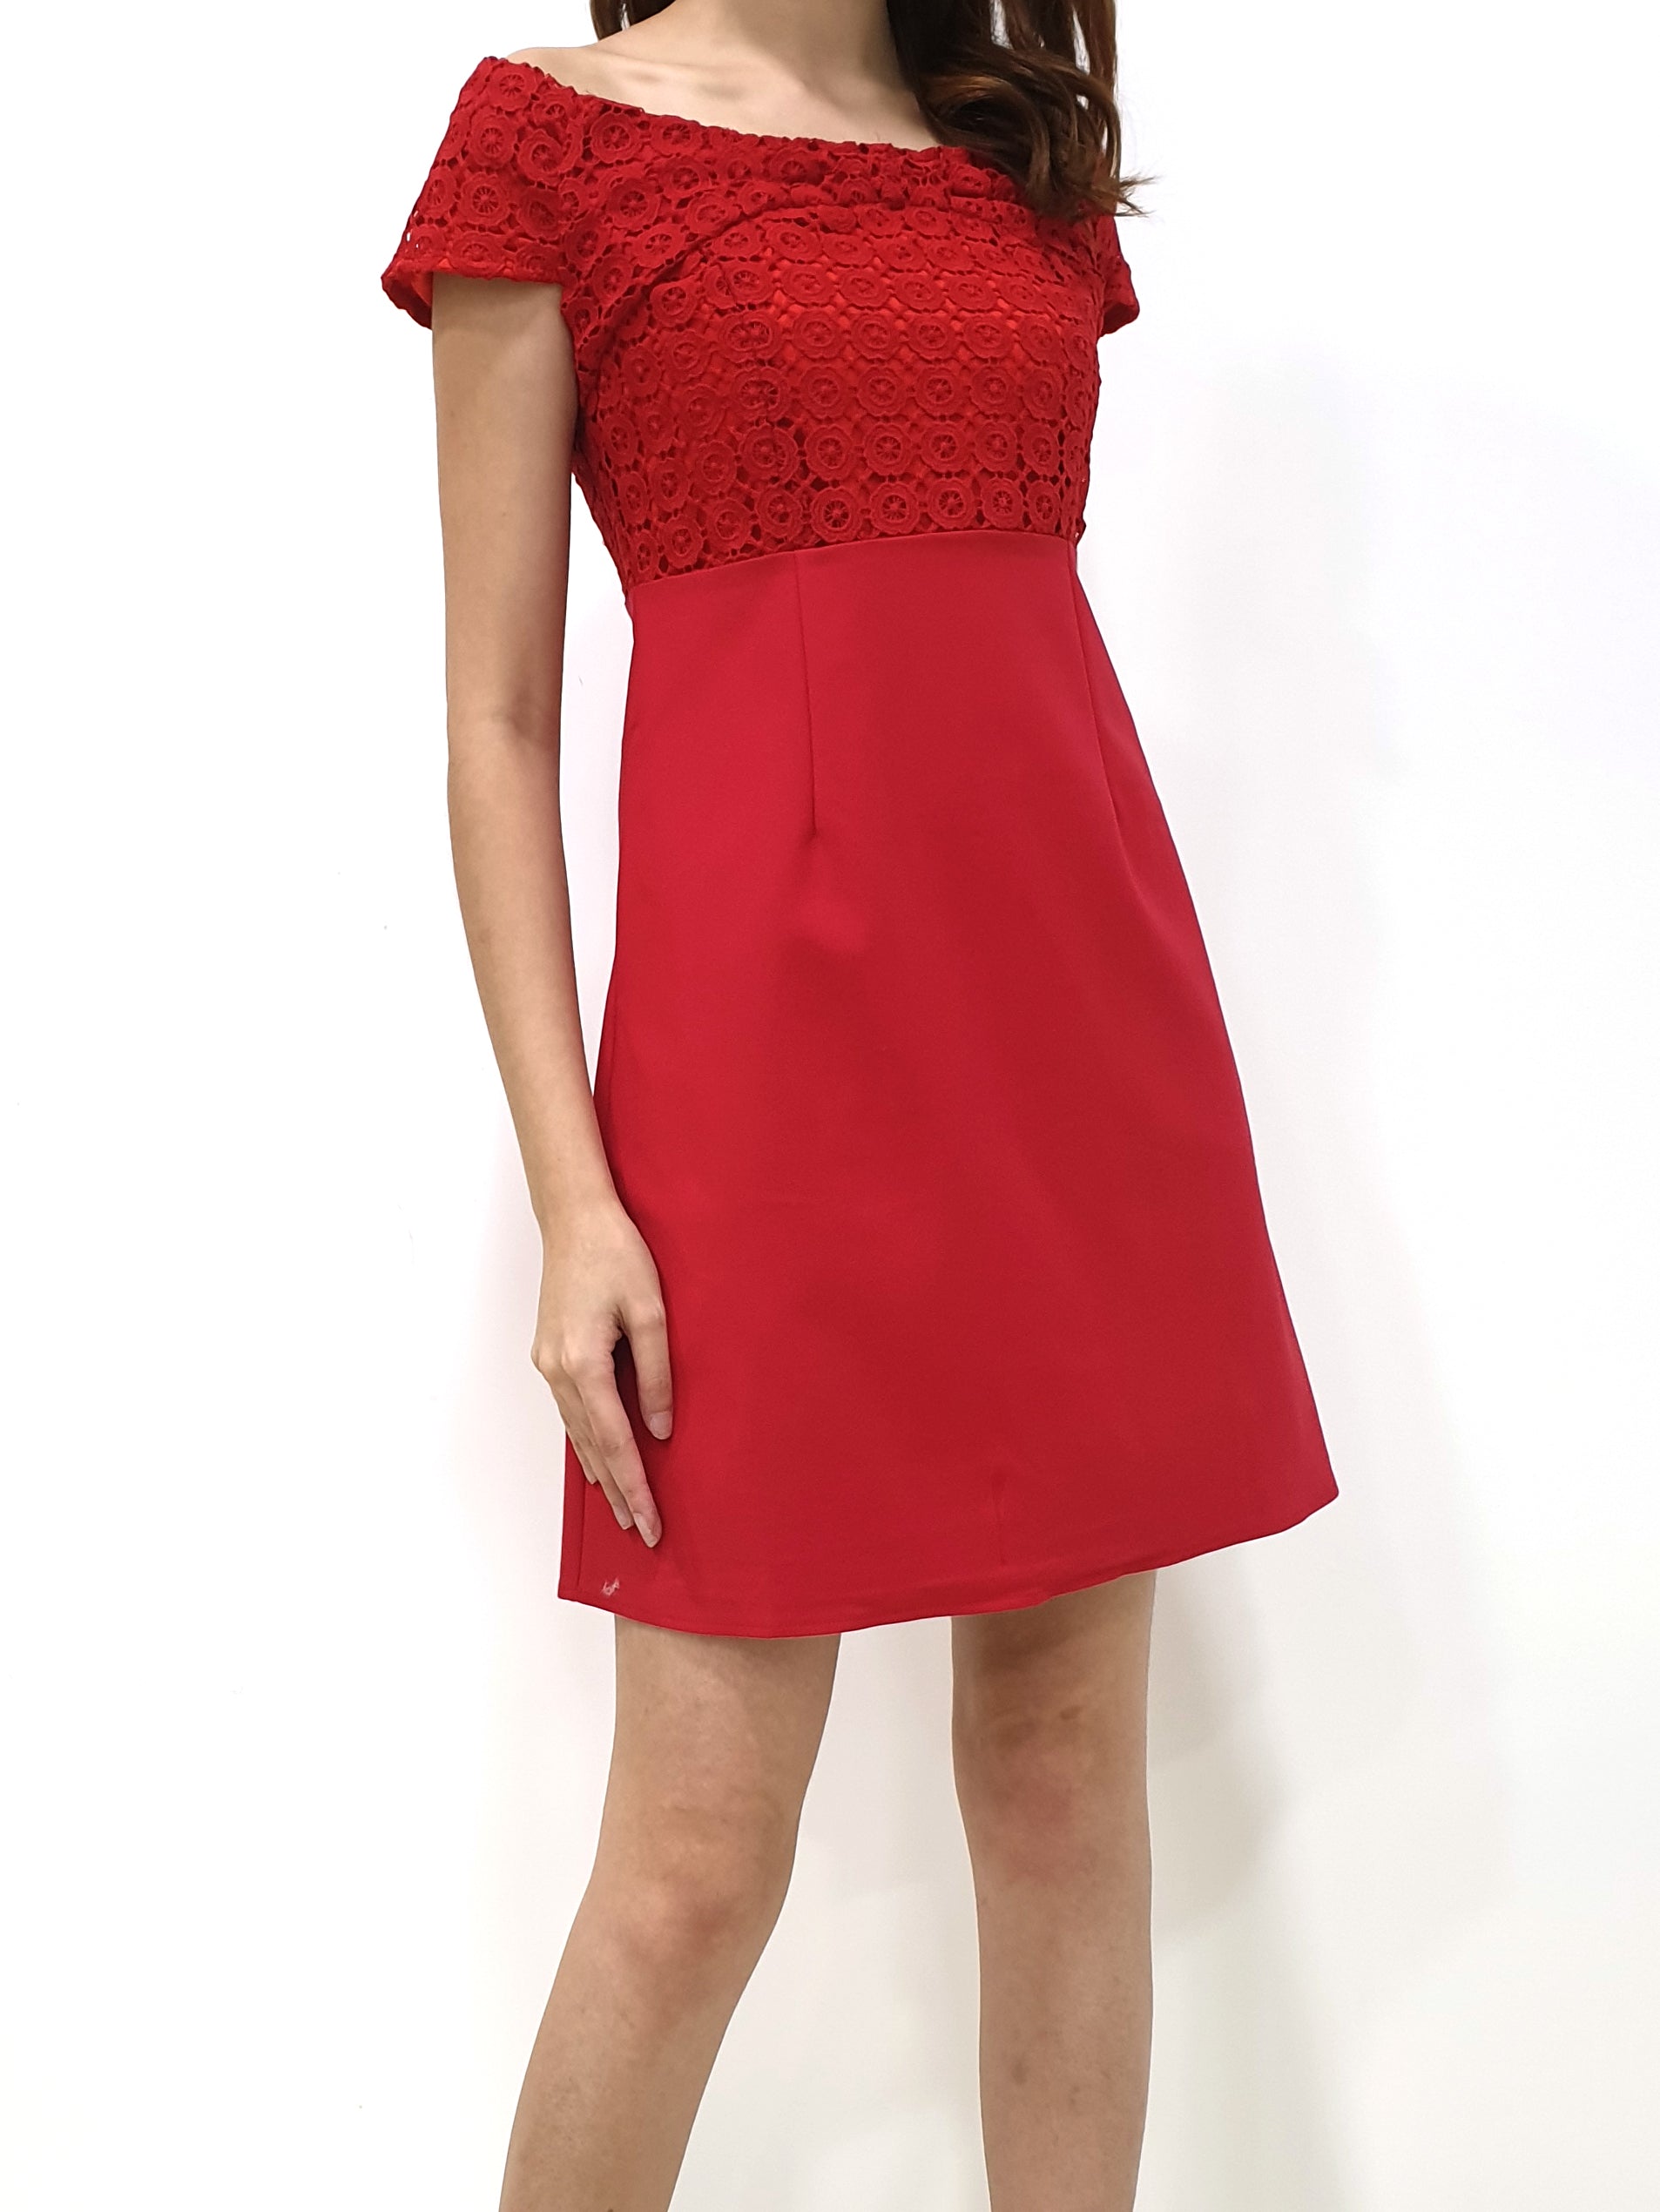 Crochet Off Shoulder Dress - Red (Non-returnable) - Ferlicious